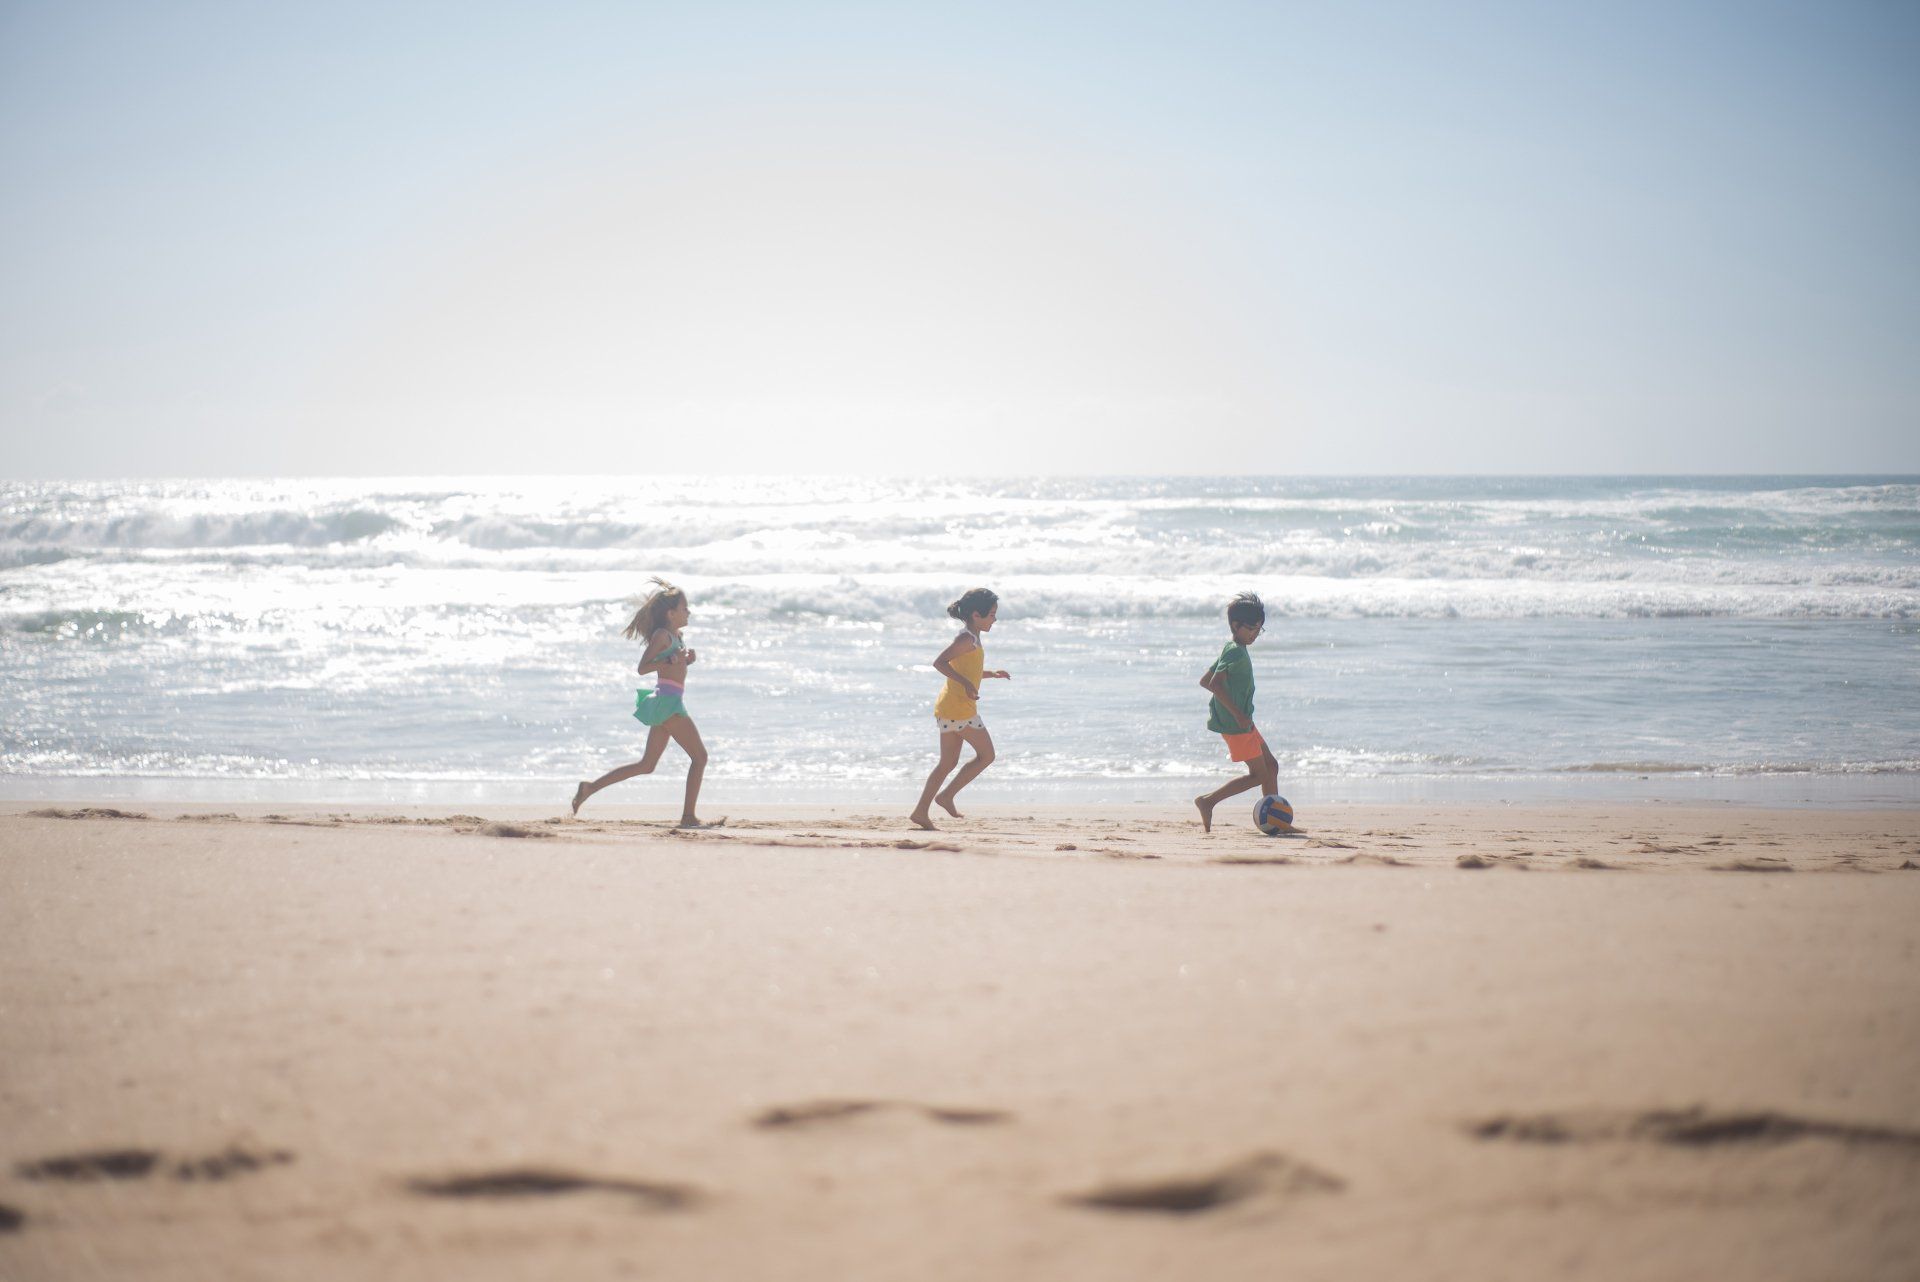 Three people are running on the beach near the ocean.